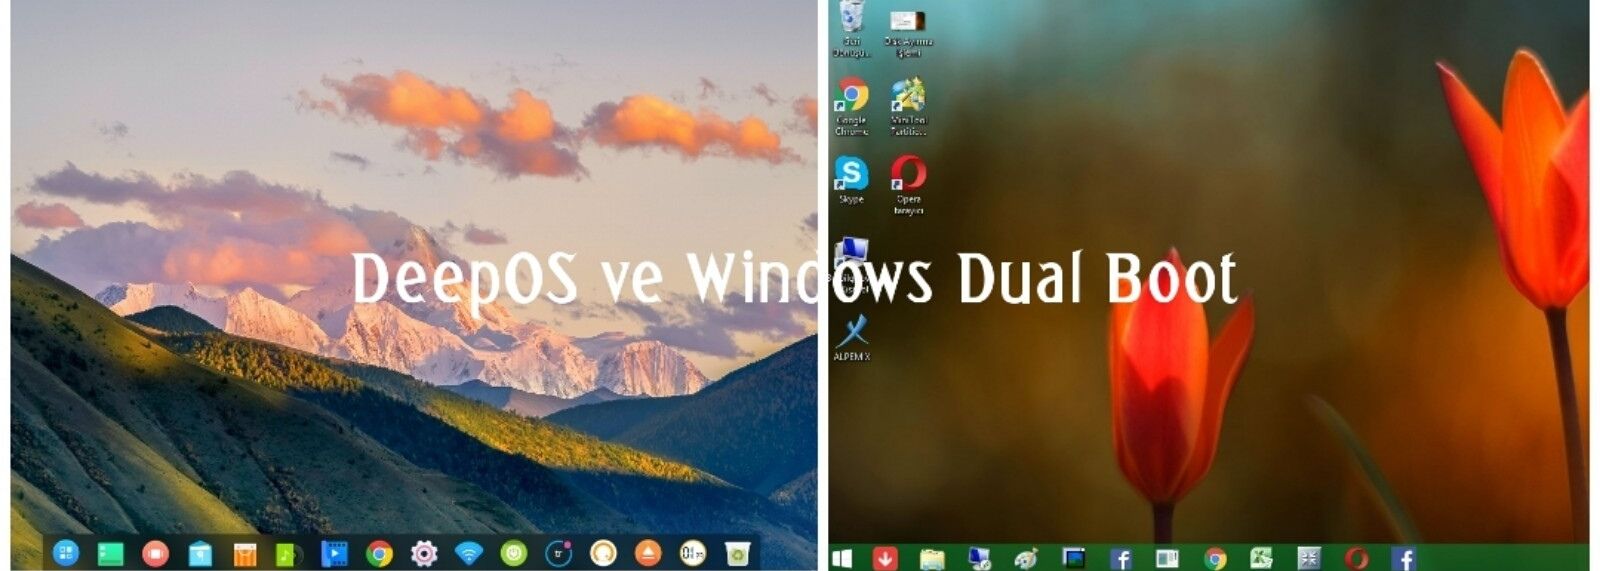 DeepinOS ve Windows Dual Boot.jpg